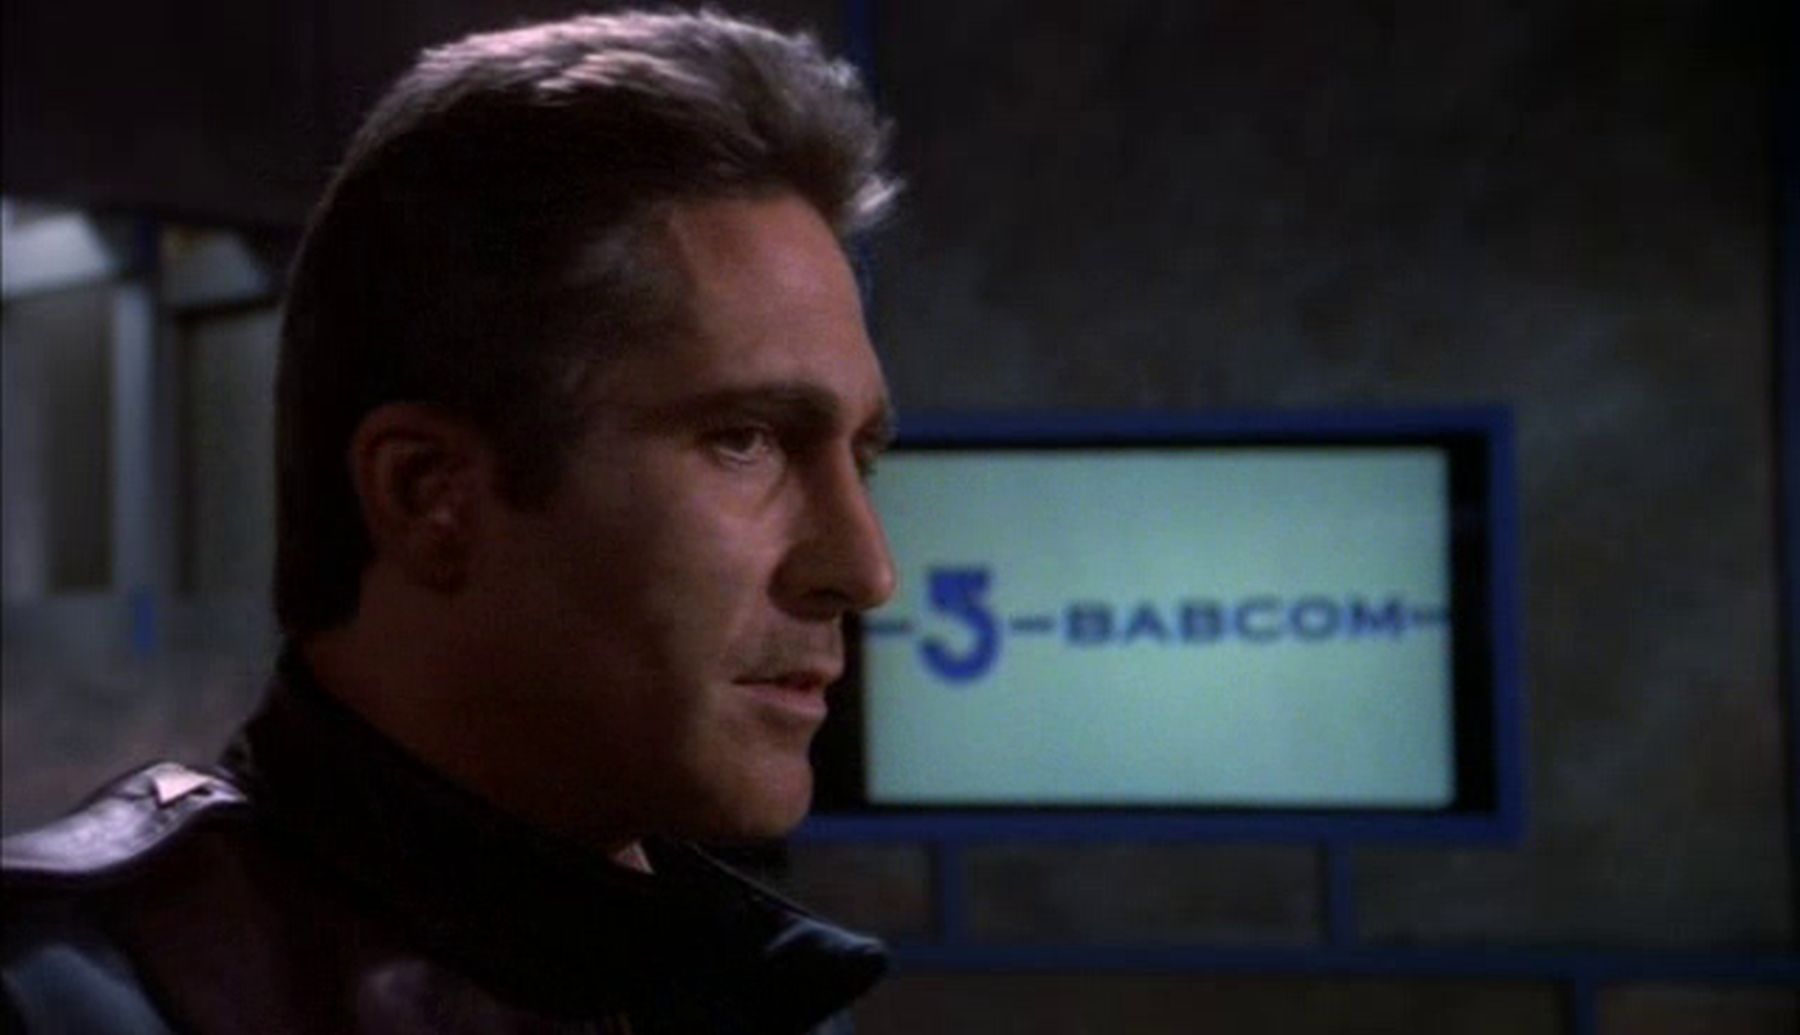 Image from Babylon 5 showing the BABCOM logo